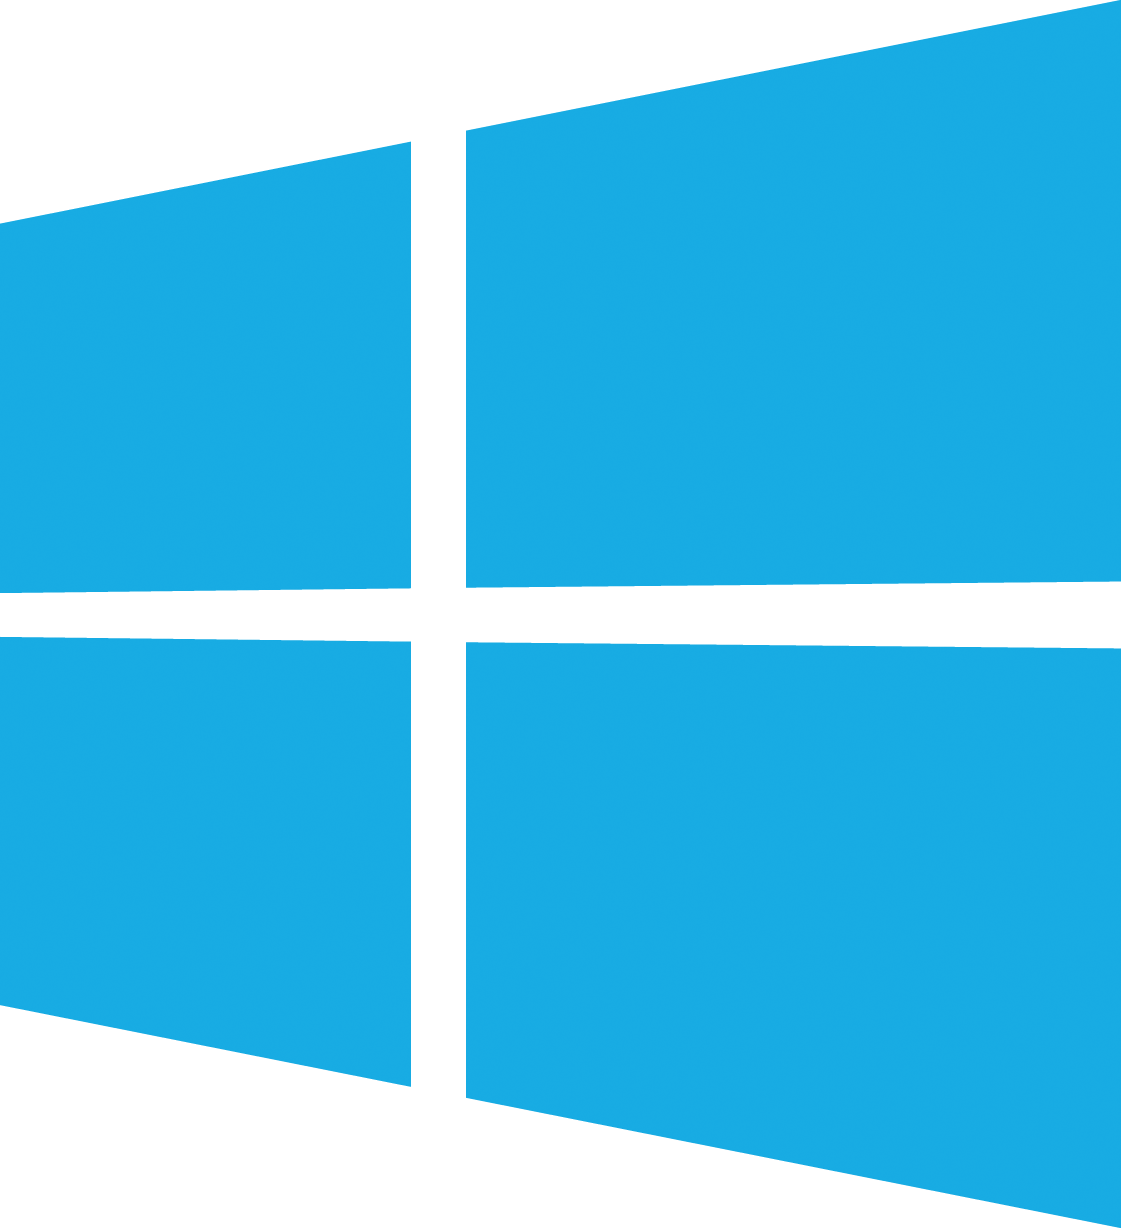 New Windows Logo Vector By Themonotm On Deviantart